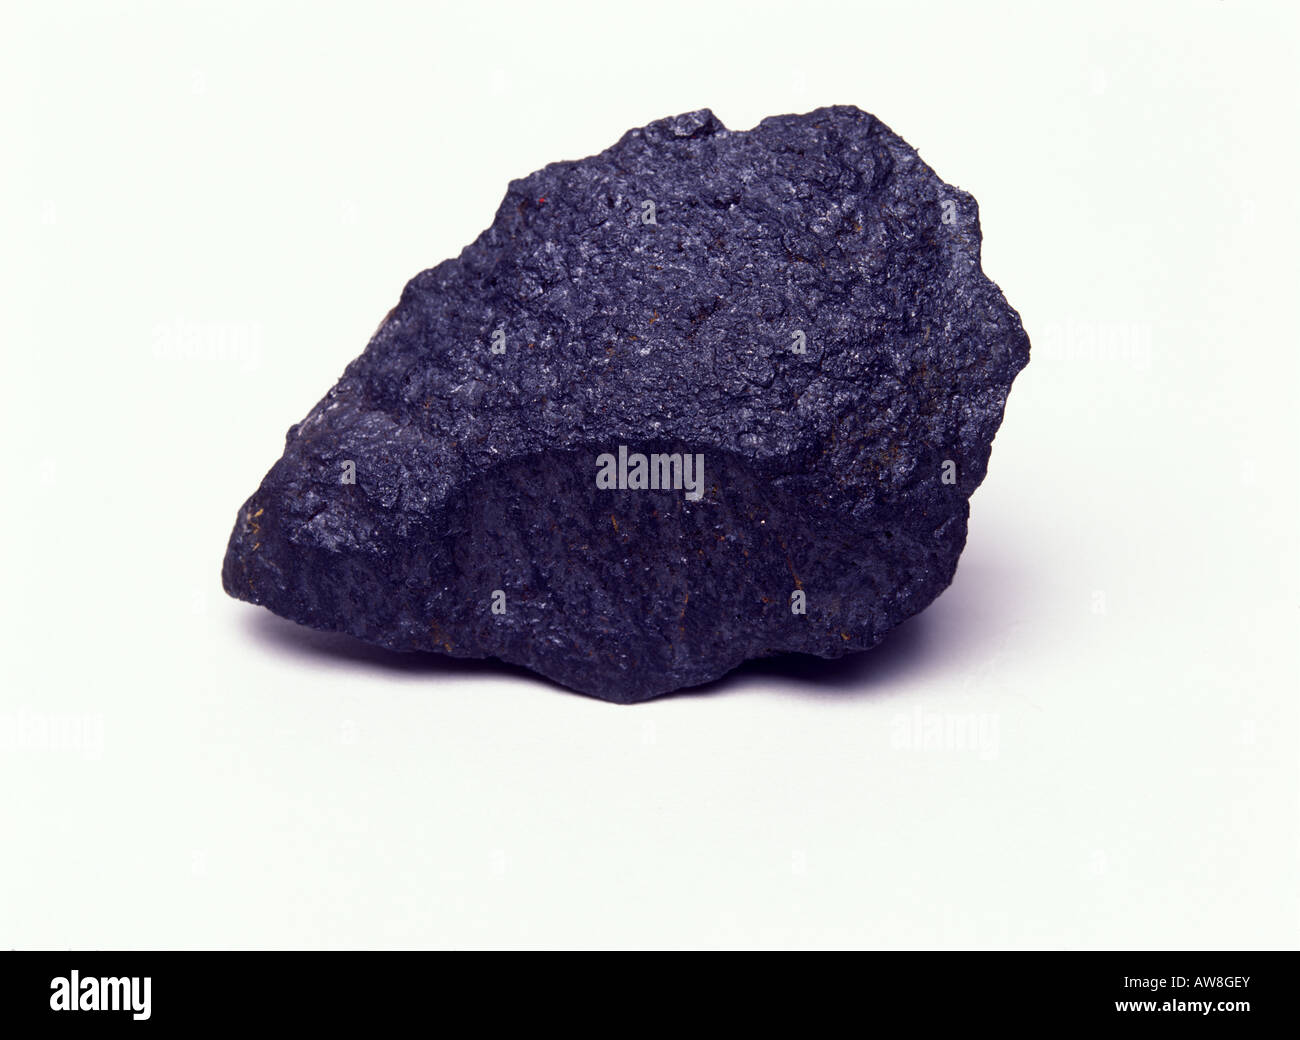 aburrido Mal humor recoger Piedra imán fotografías e imágenes de alta resolución - Alamy